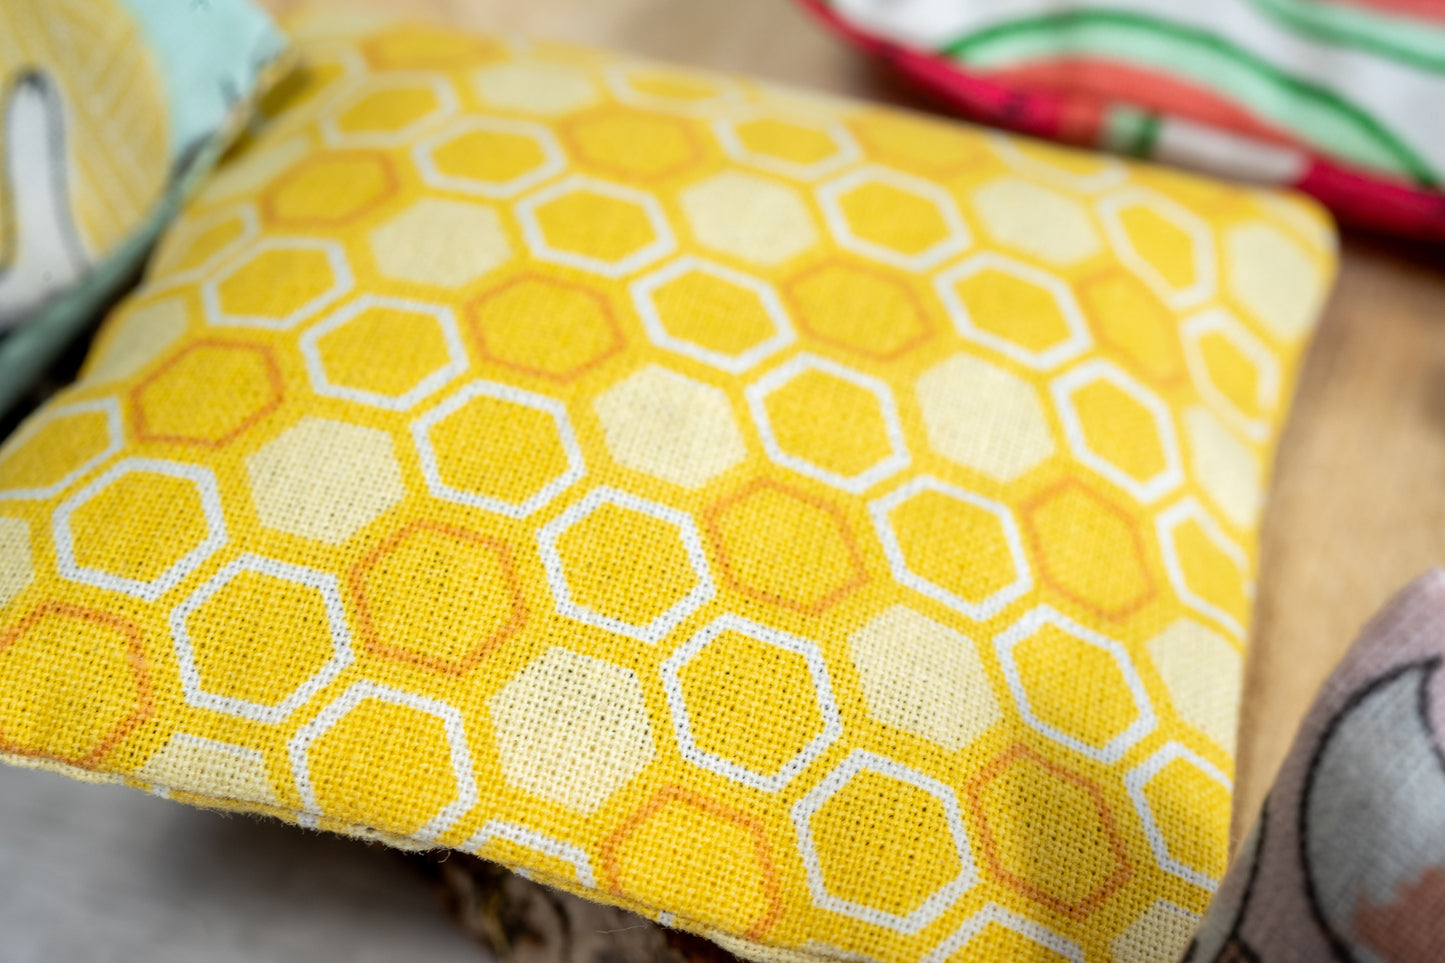 Honeycomb patterned cat kicker.